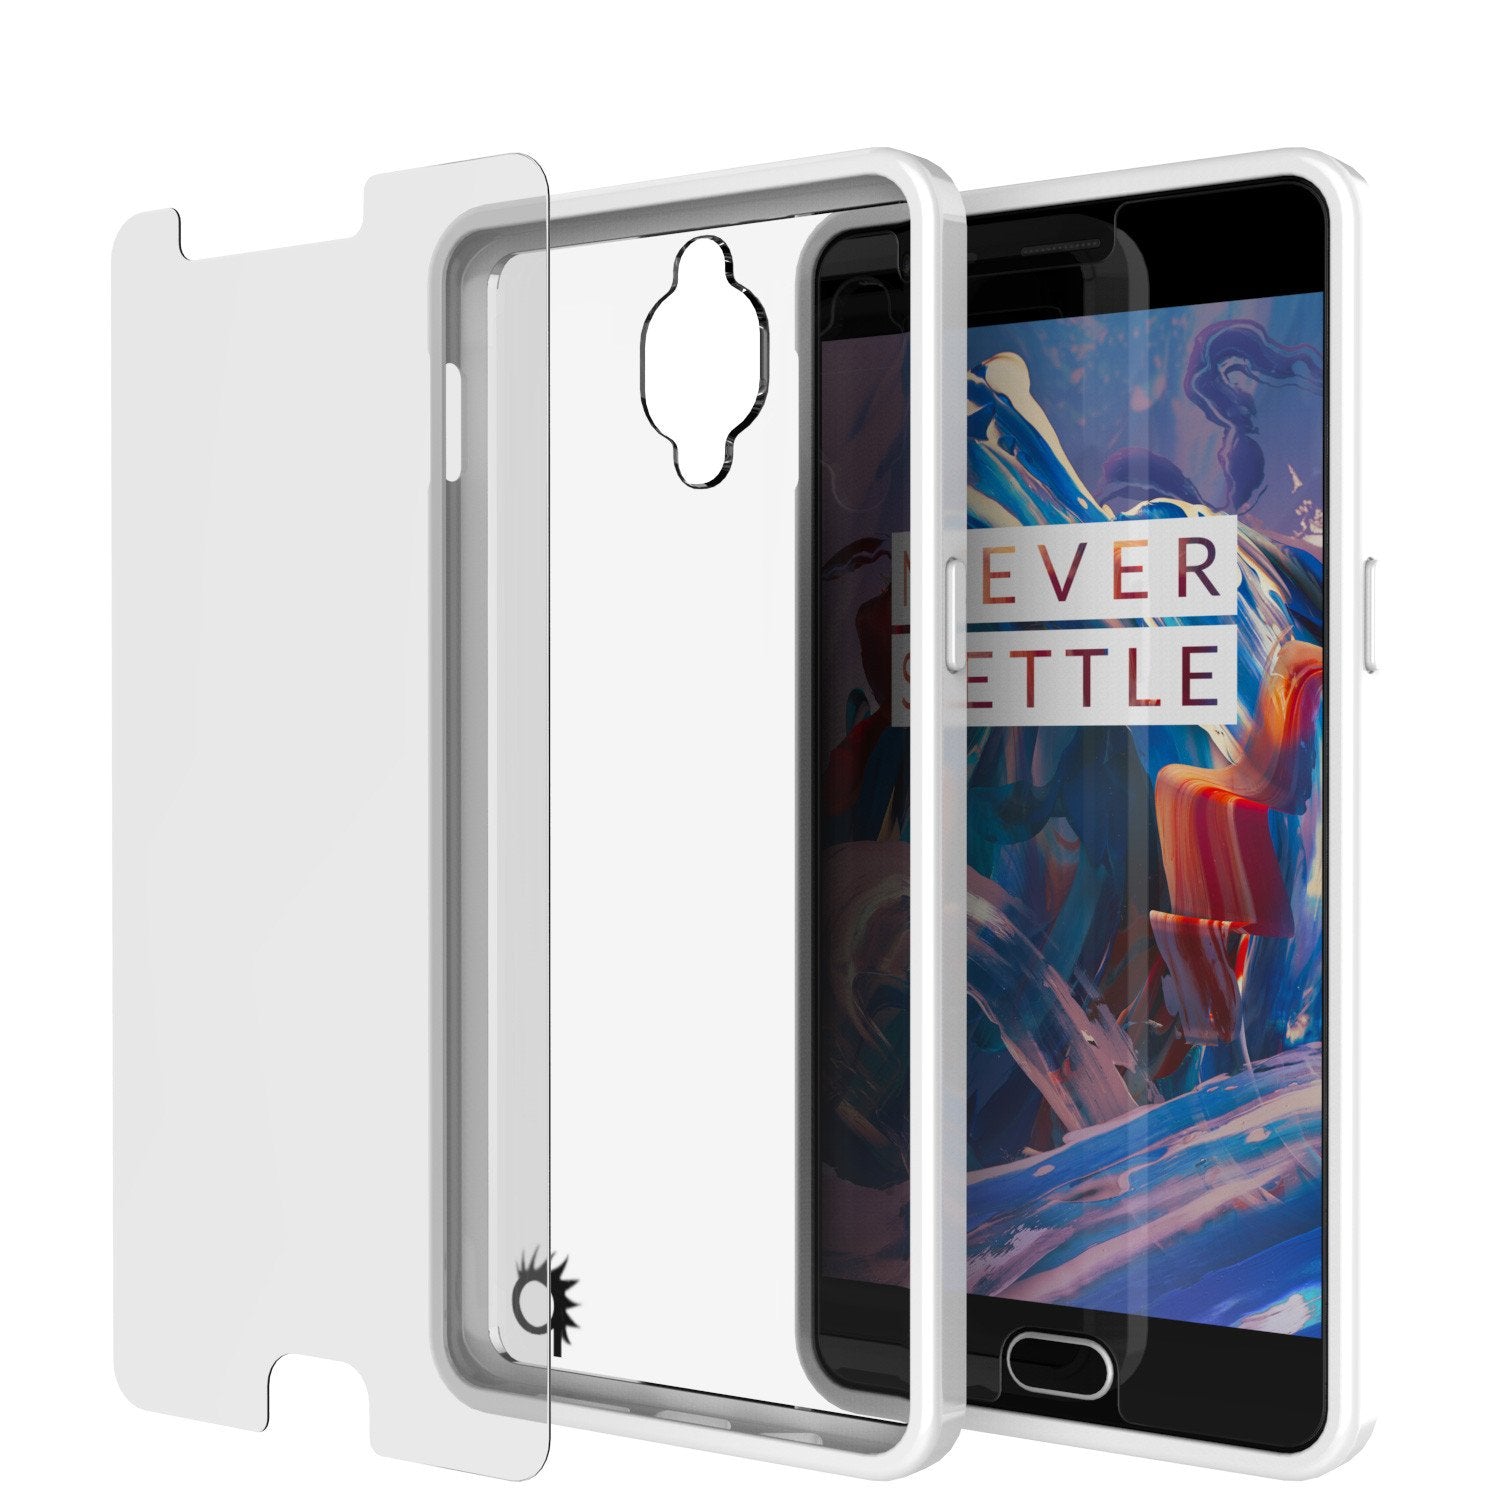 OnePlus 3 Case Punkcase® LUCID 2.0 White Series w/ SHIELD GLASS Lifetime Warranty Exchange